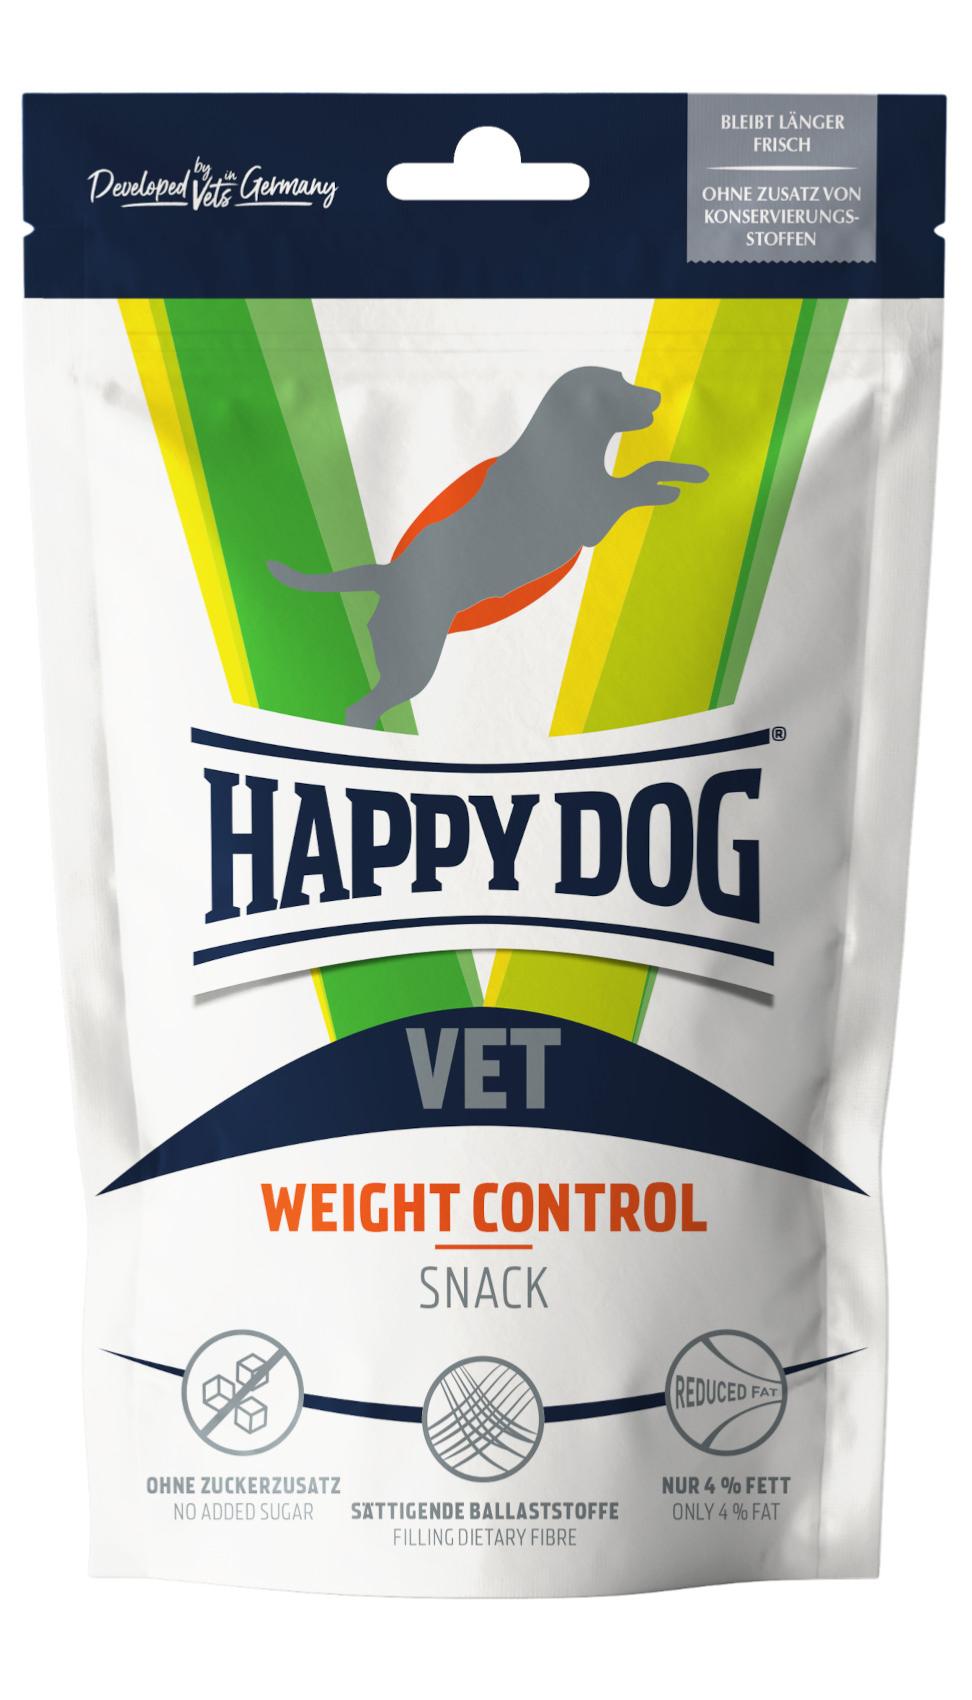 Happy Dog VET Snack Weight Control